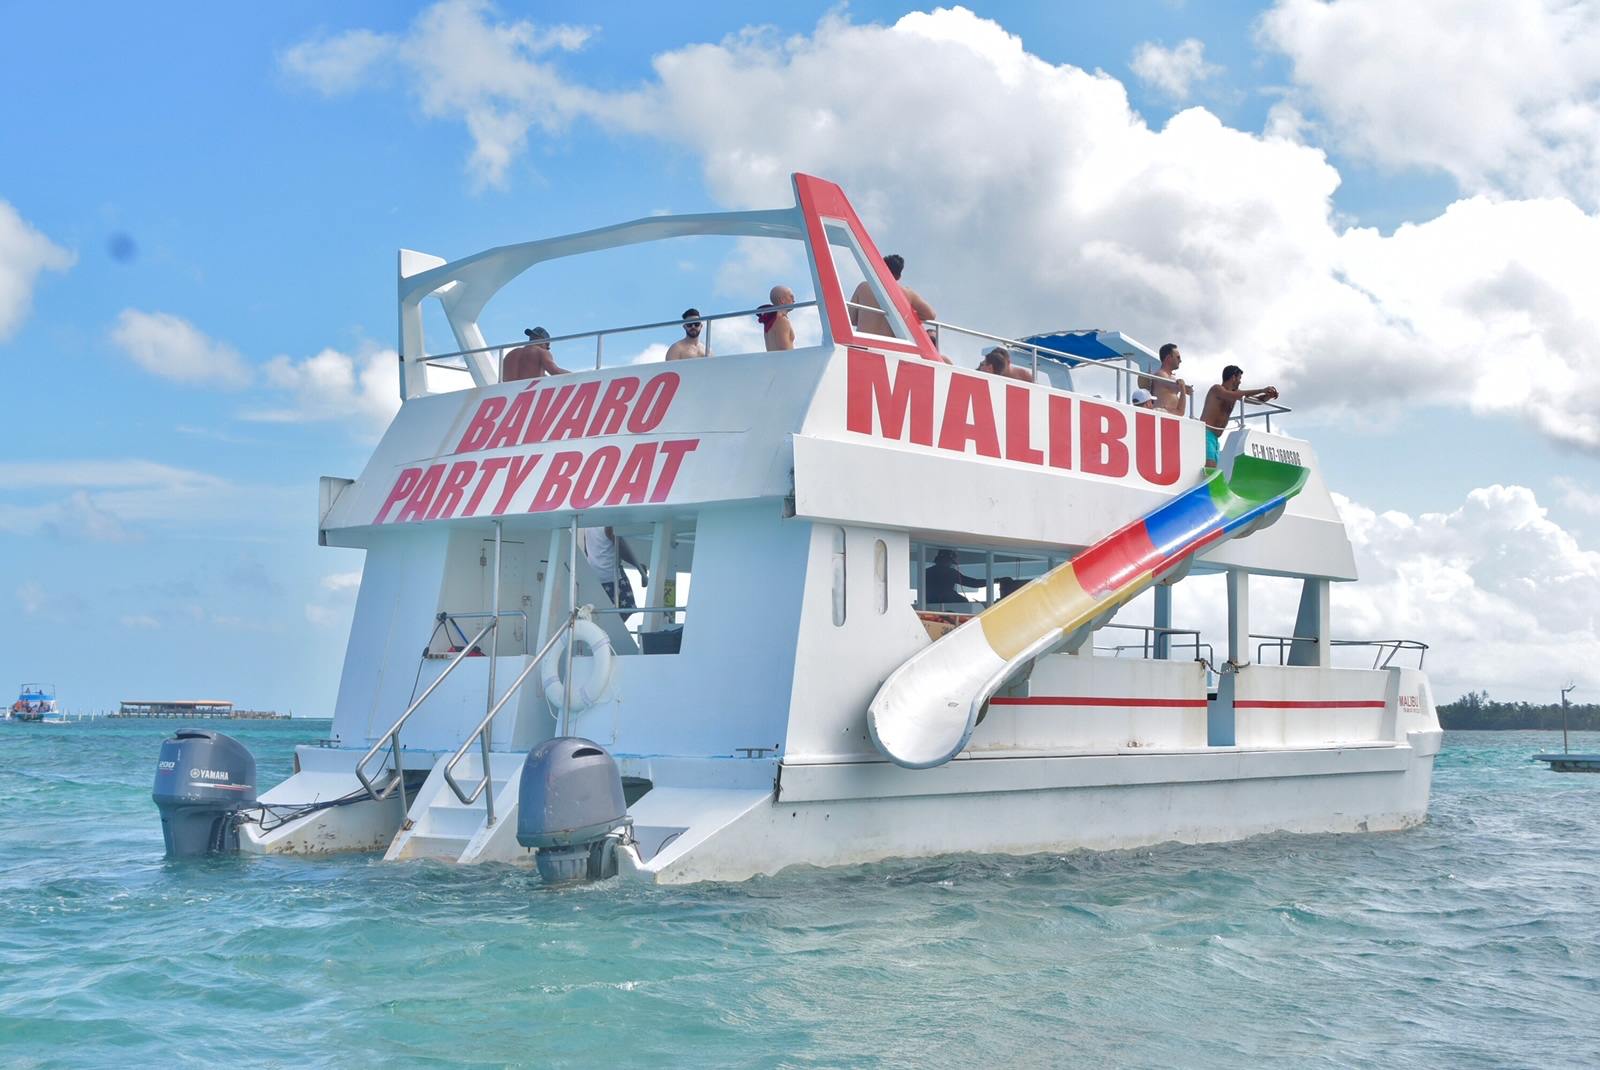 Malibu Party Boat 